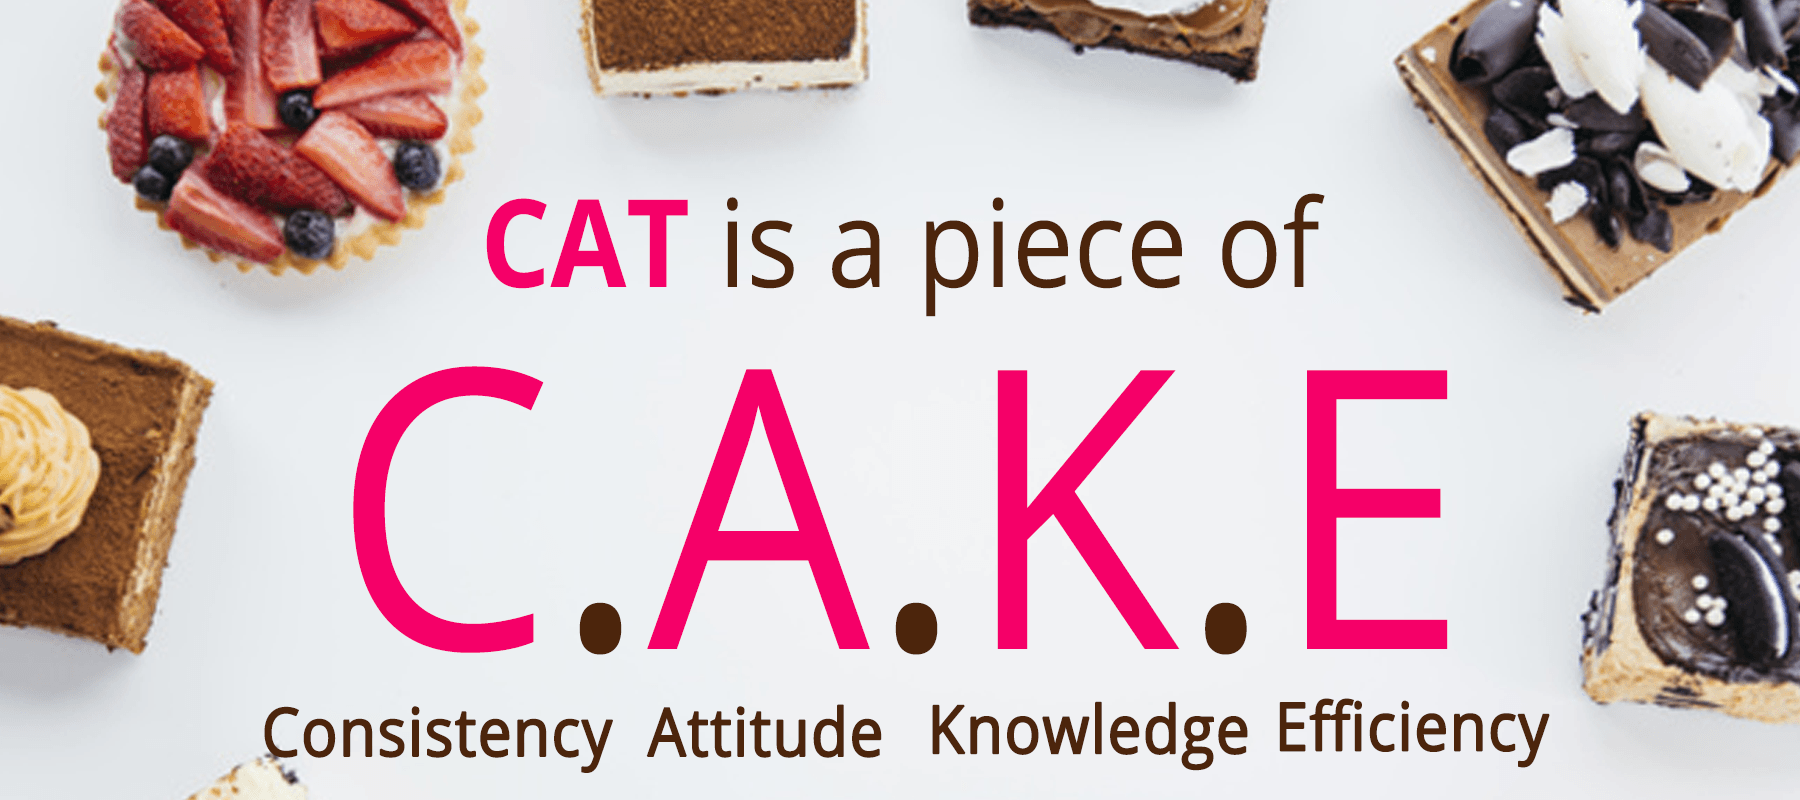 CAT, the piece of cake